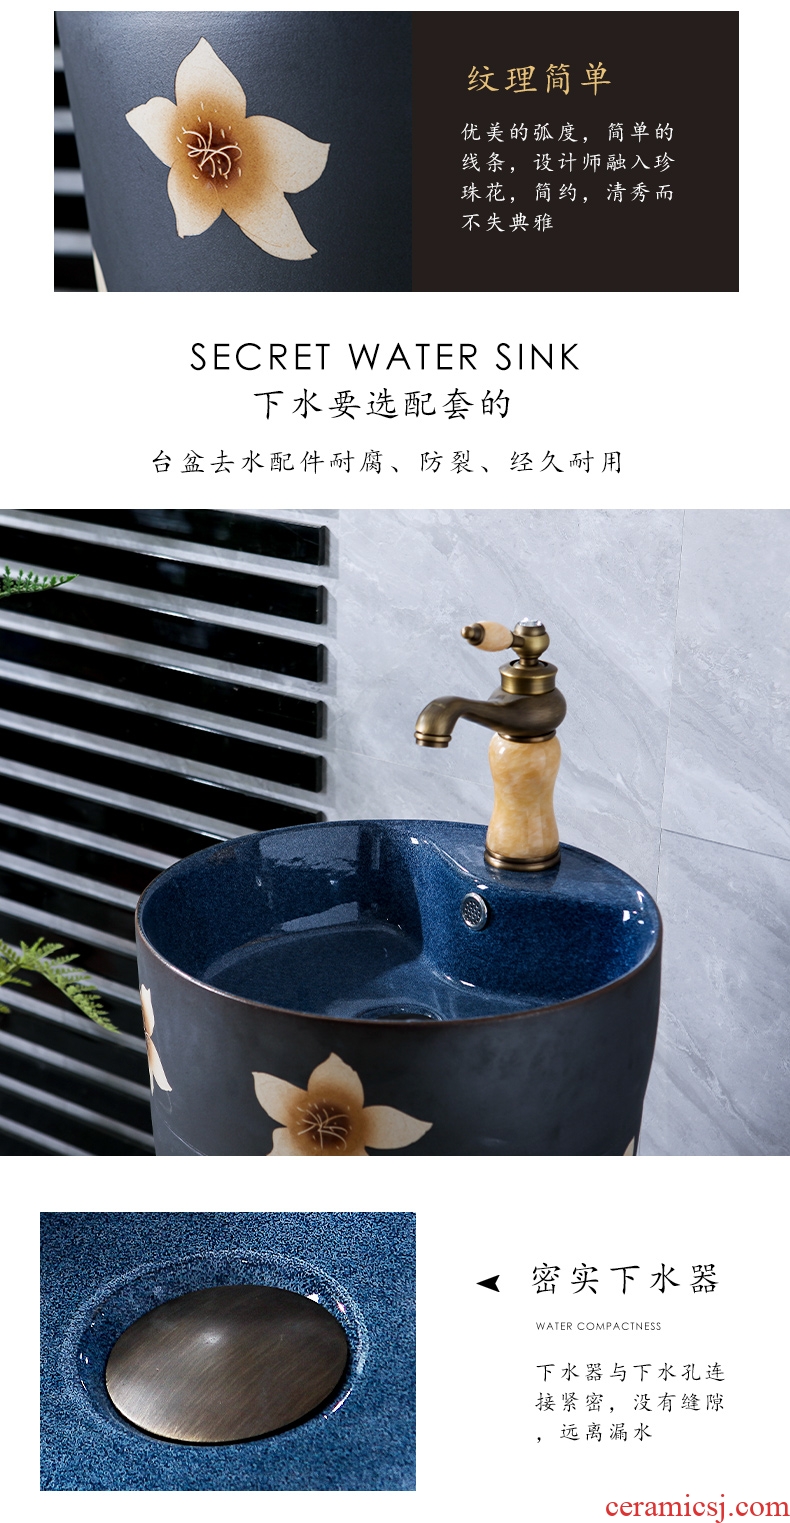 Pearl flower art pillar basin vertical integrated ceramic lavabo pillar type courtyard floor type lavatory basin